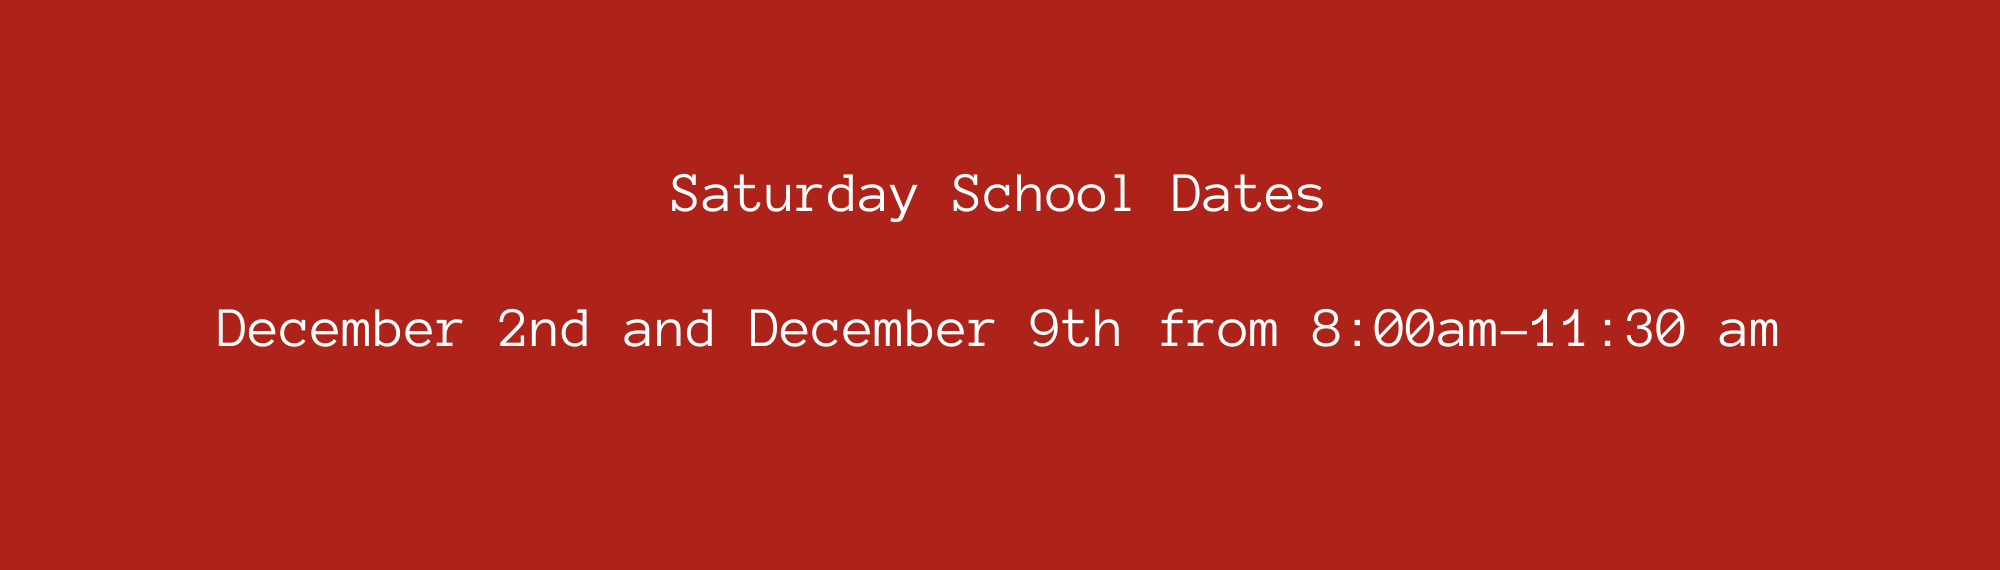 Saturday School dates December 